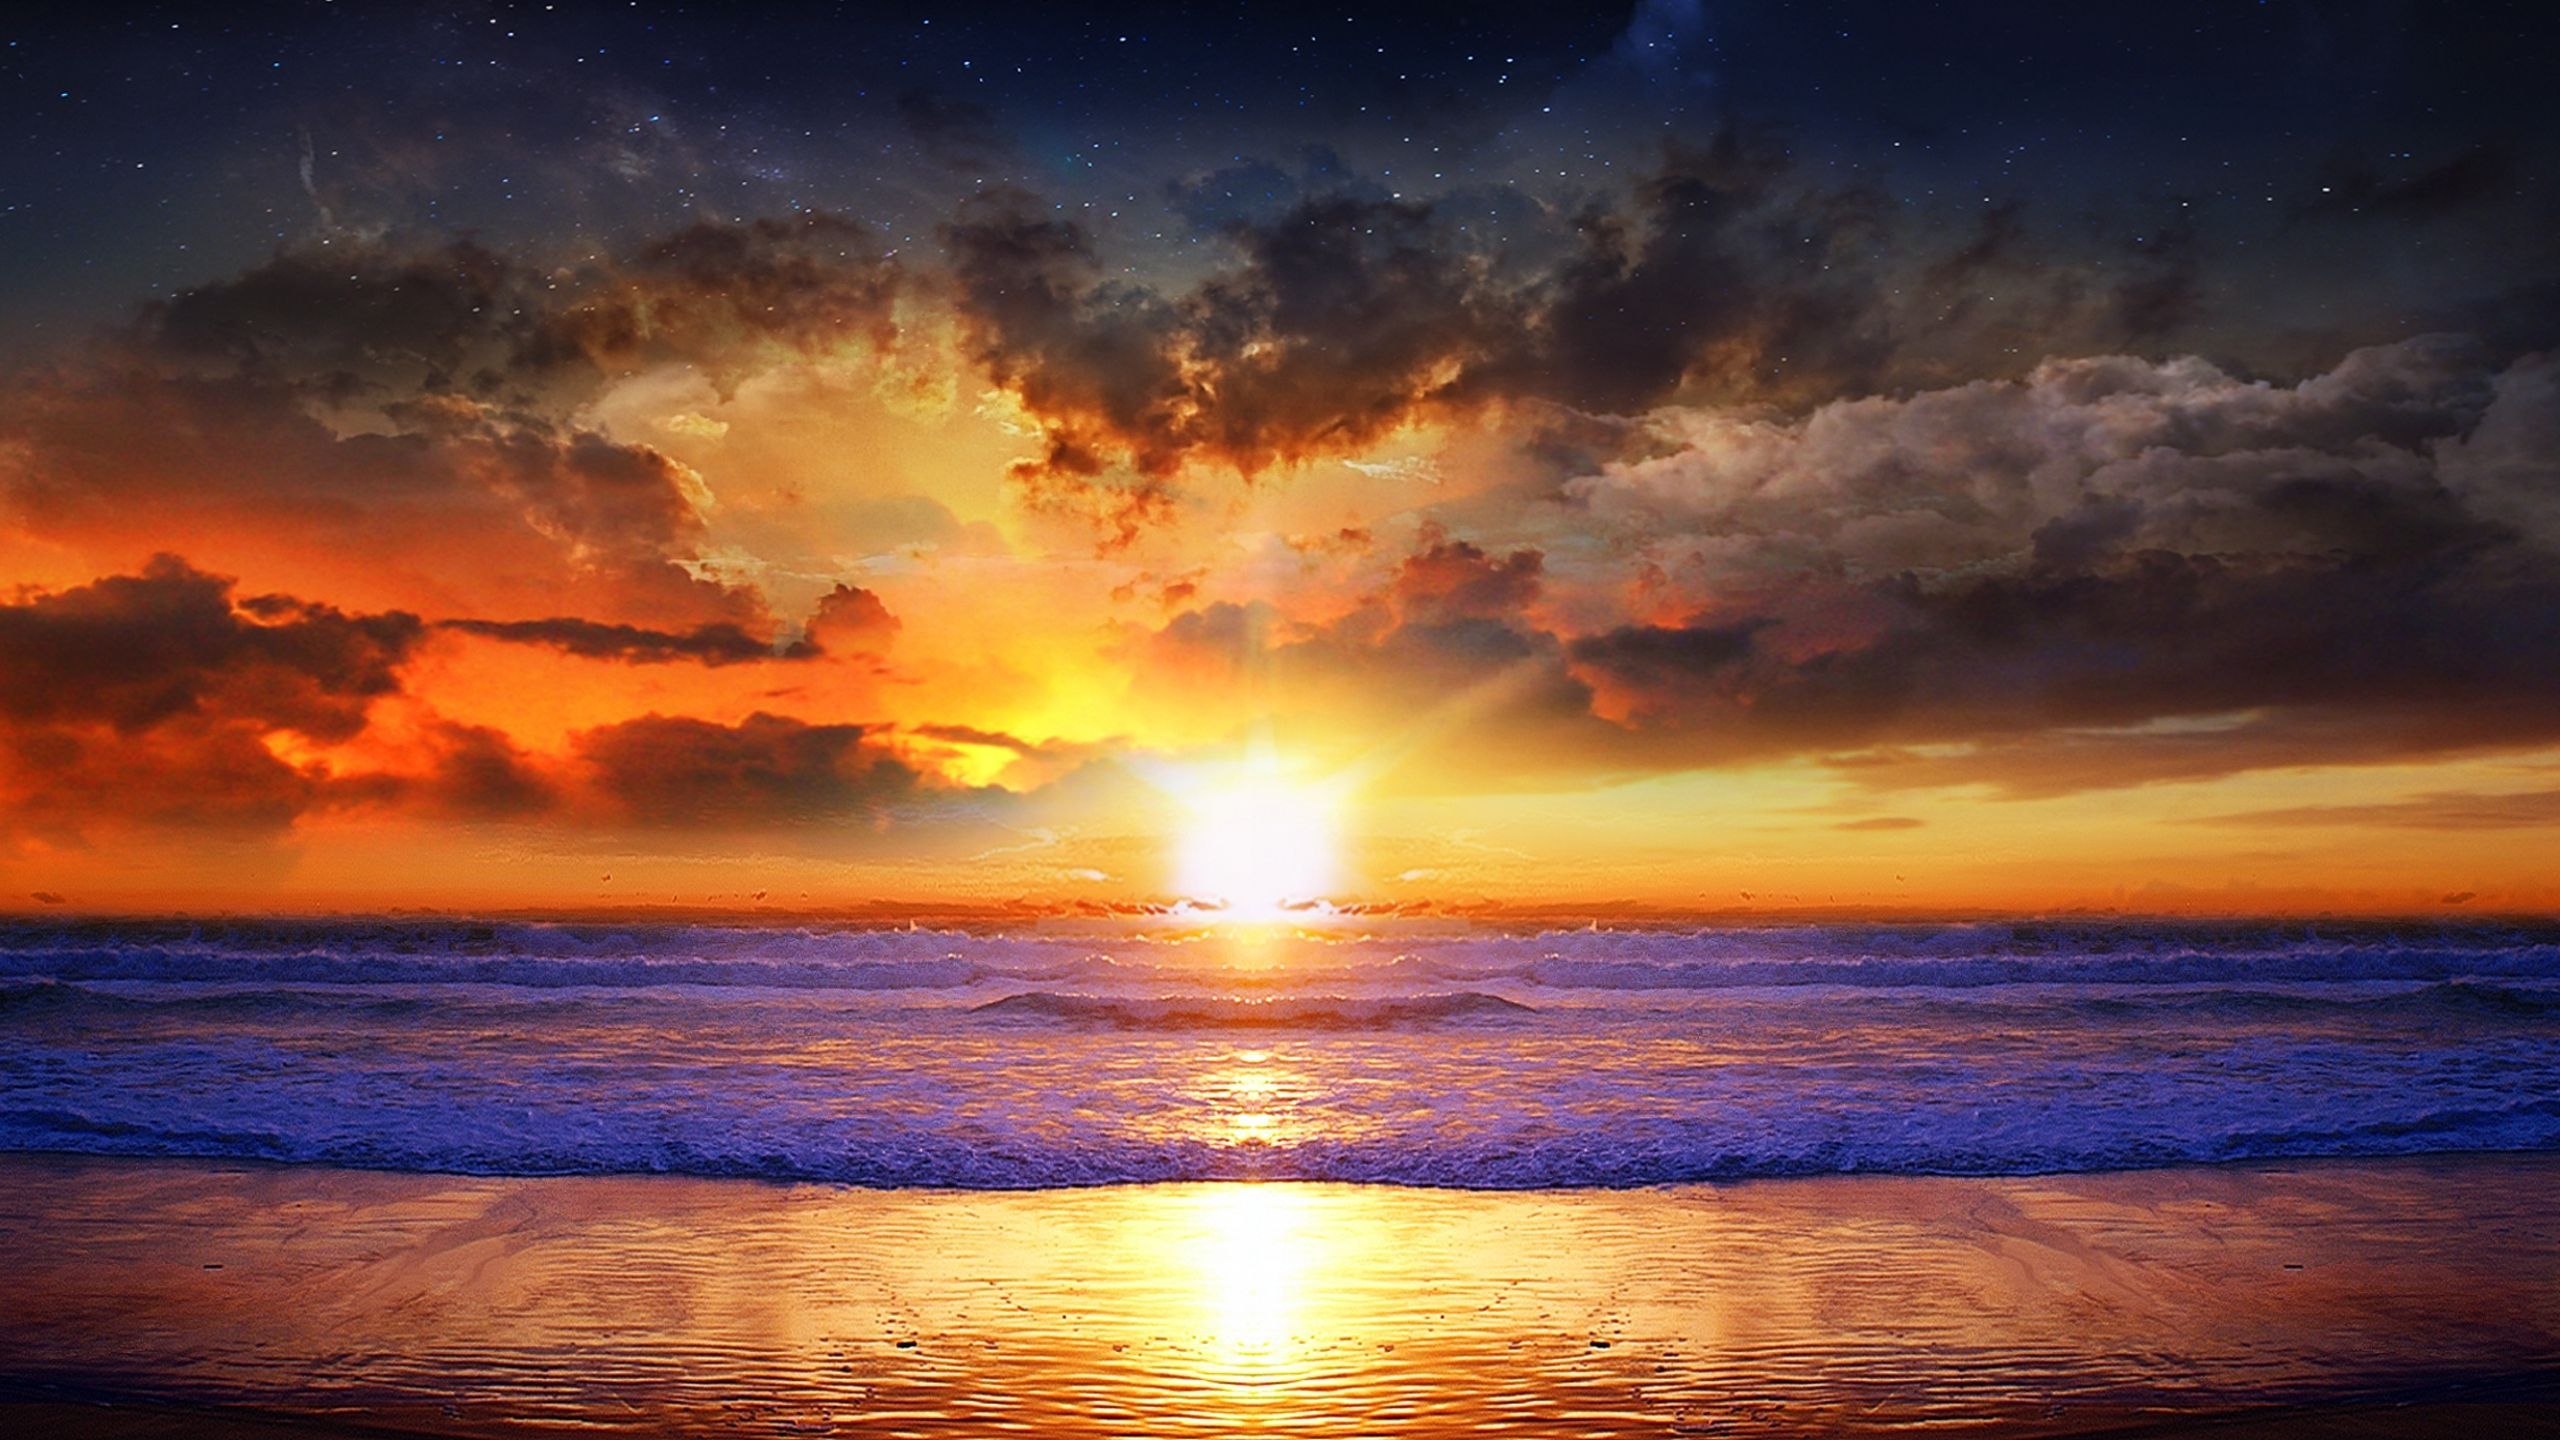 The Sunrise Desktop Background wallpaper free. Sunrise wallpaper, Sunset wallpaper, Desktop background nature